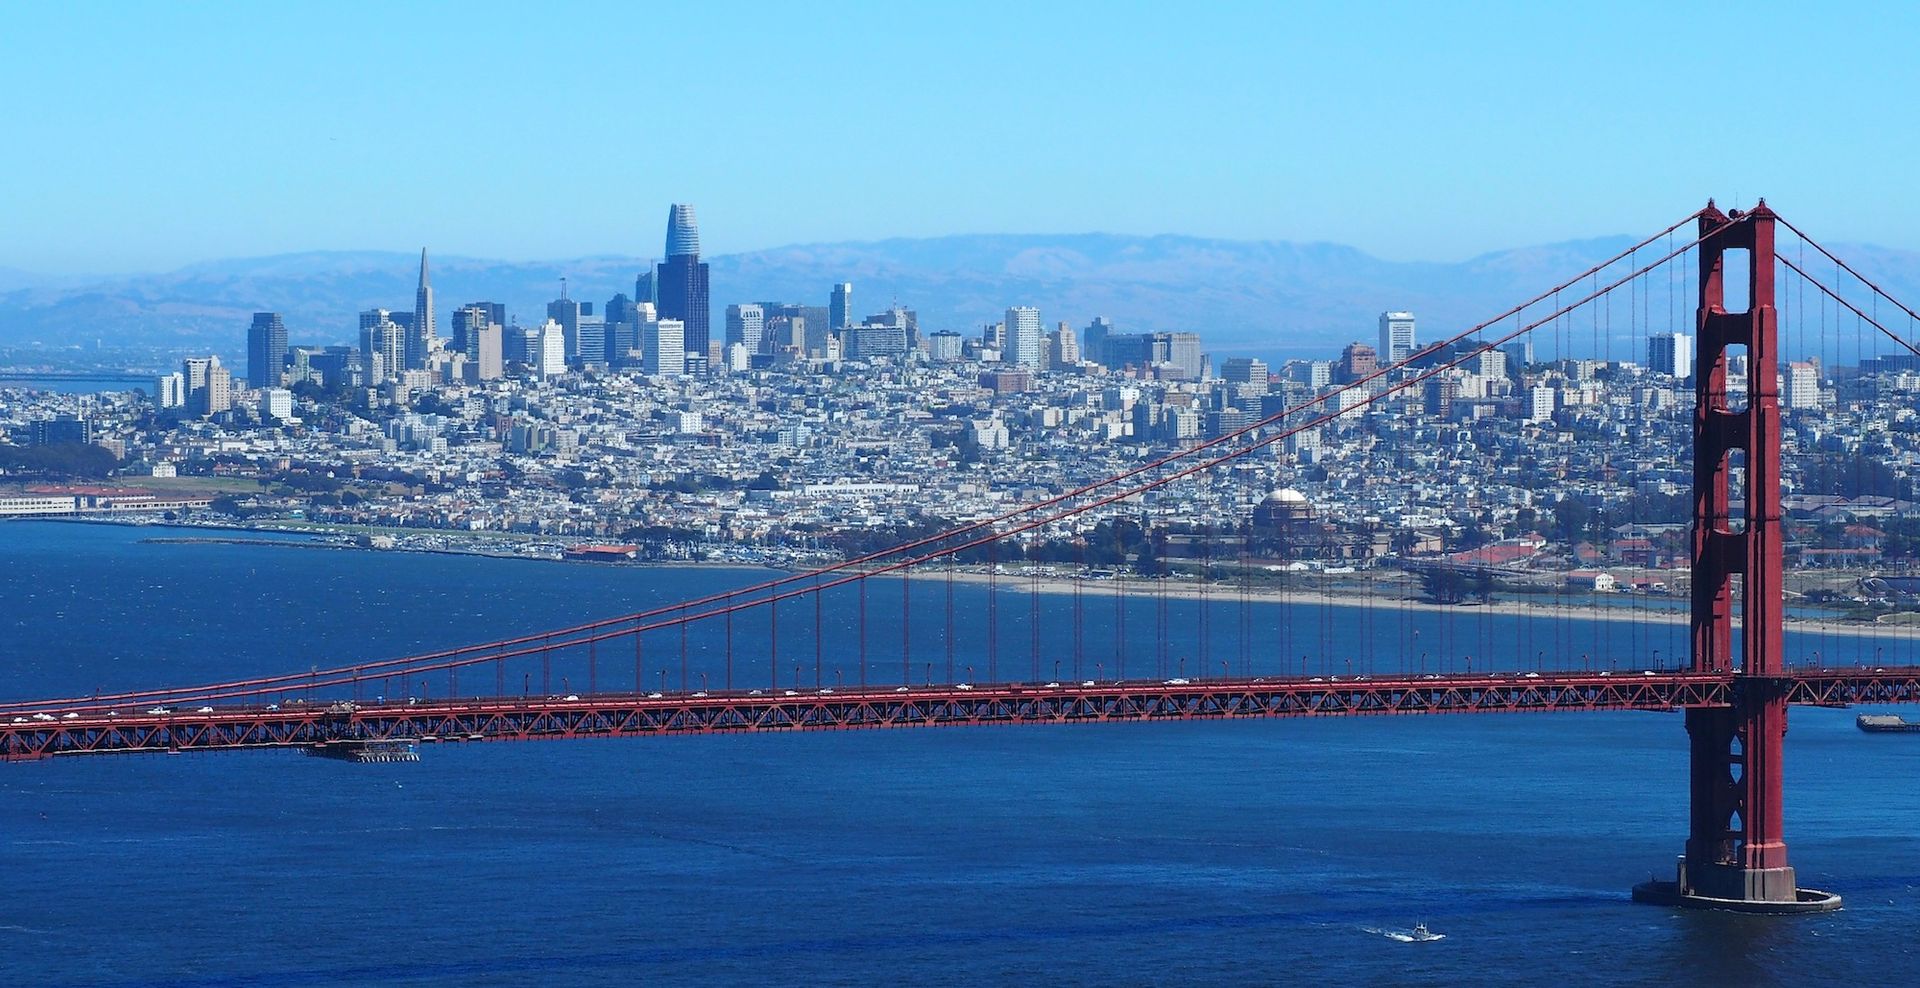 The San Francisco skyline as seen from the Marin Headlands Photo by Noah Friedlander, via Wikimedia Commons